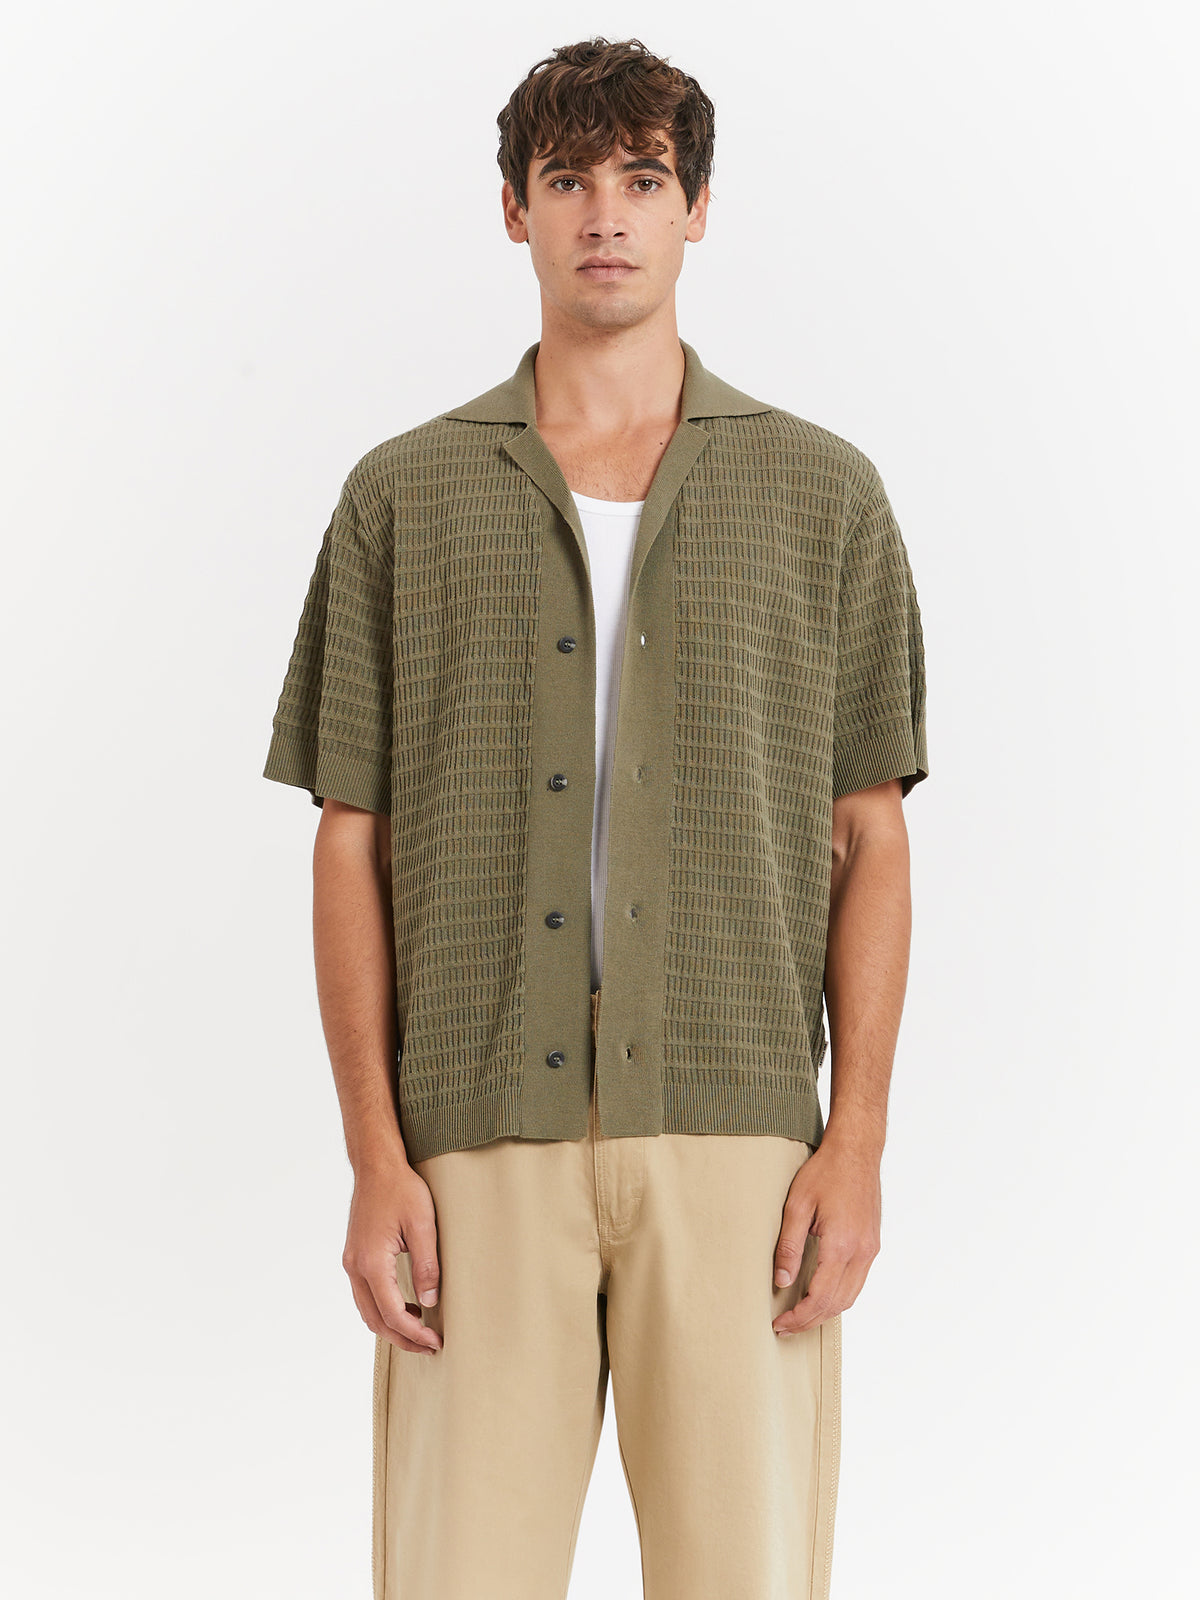 Zanito Knit Shirt in Olive